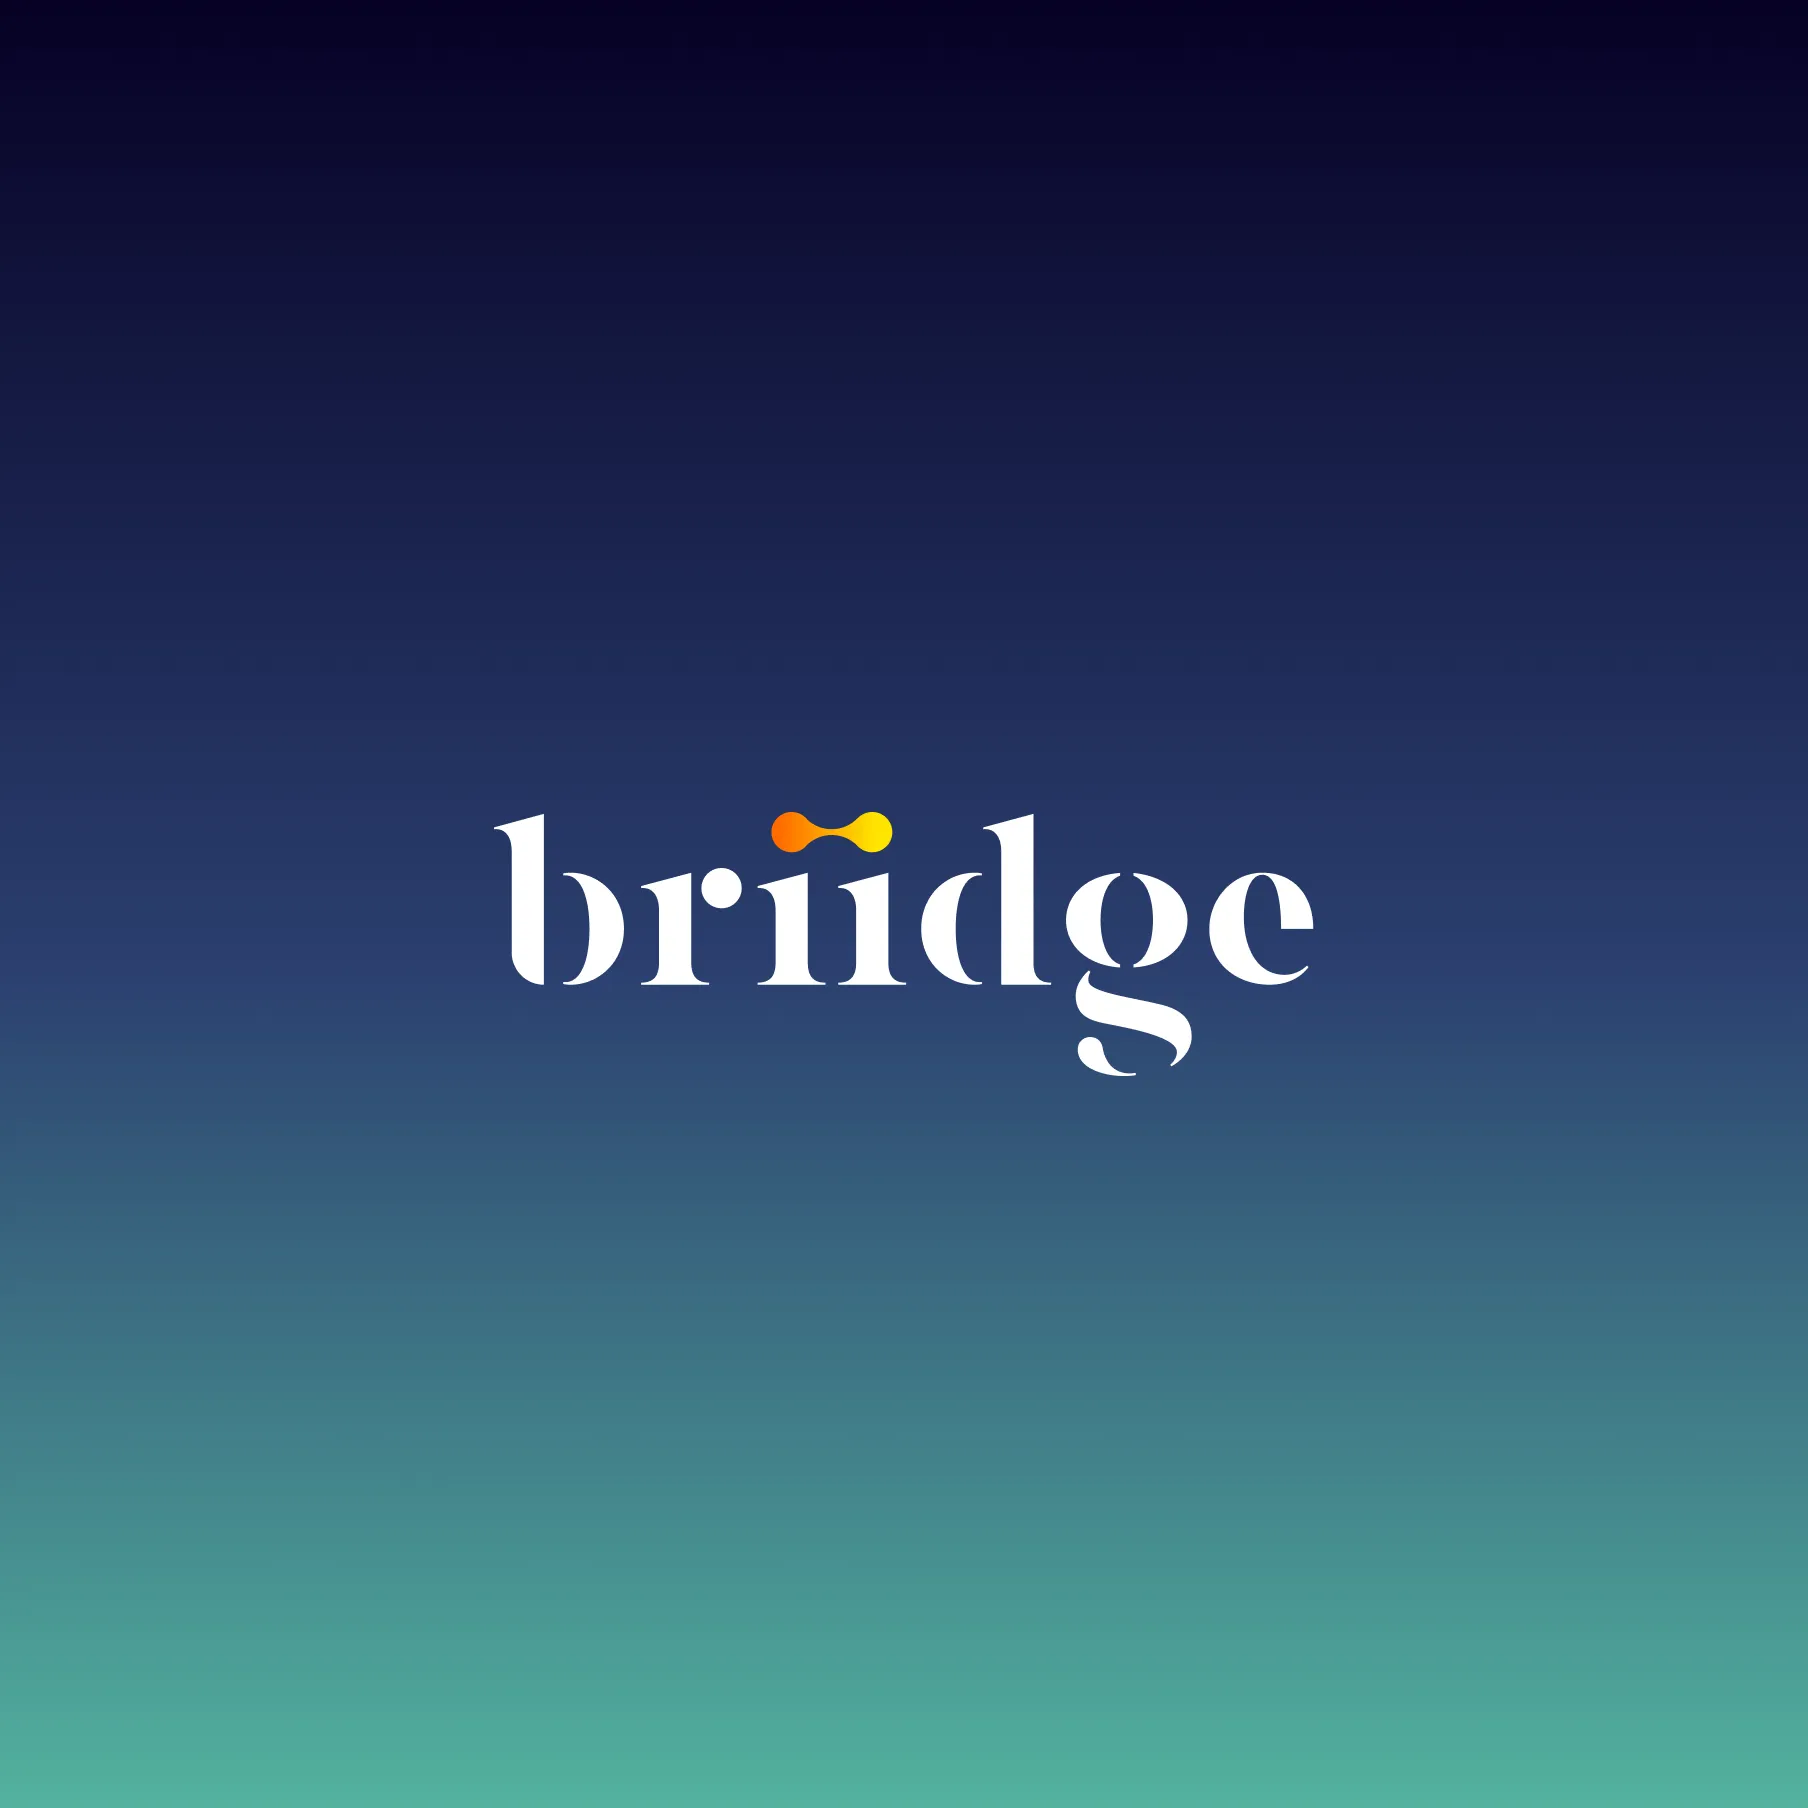 briidge music app brand